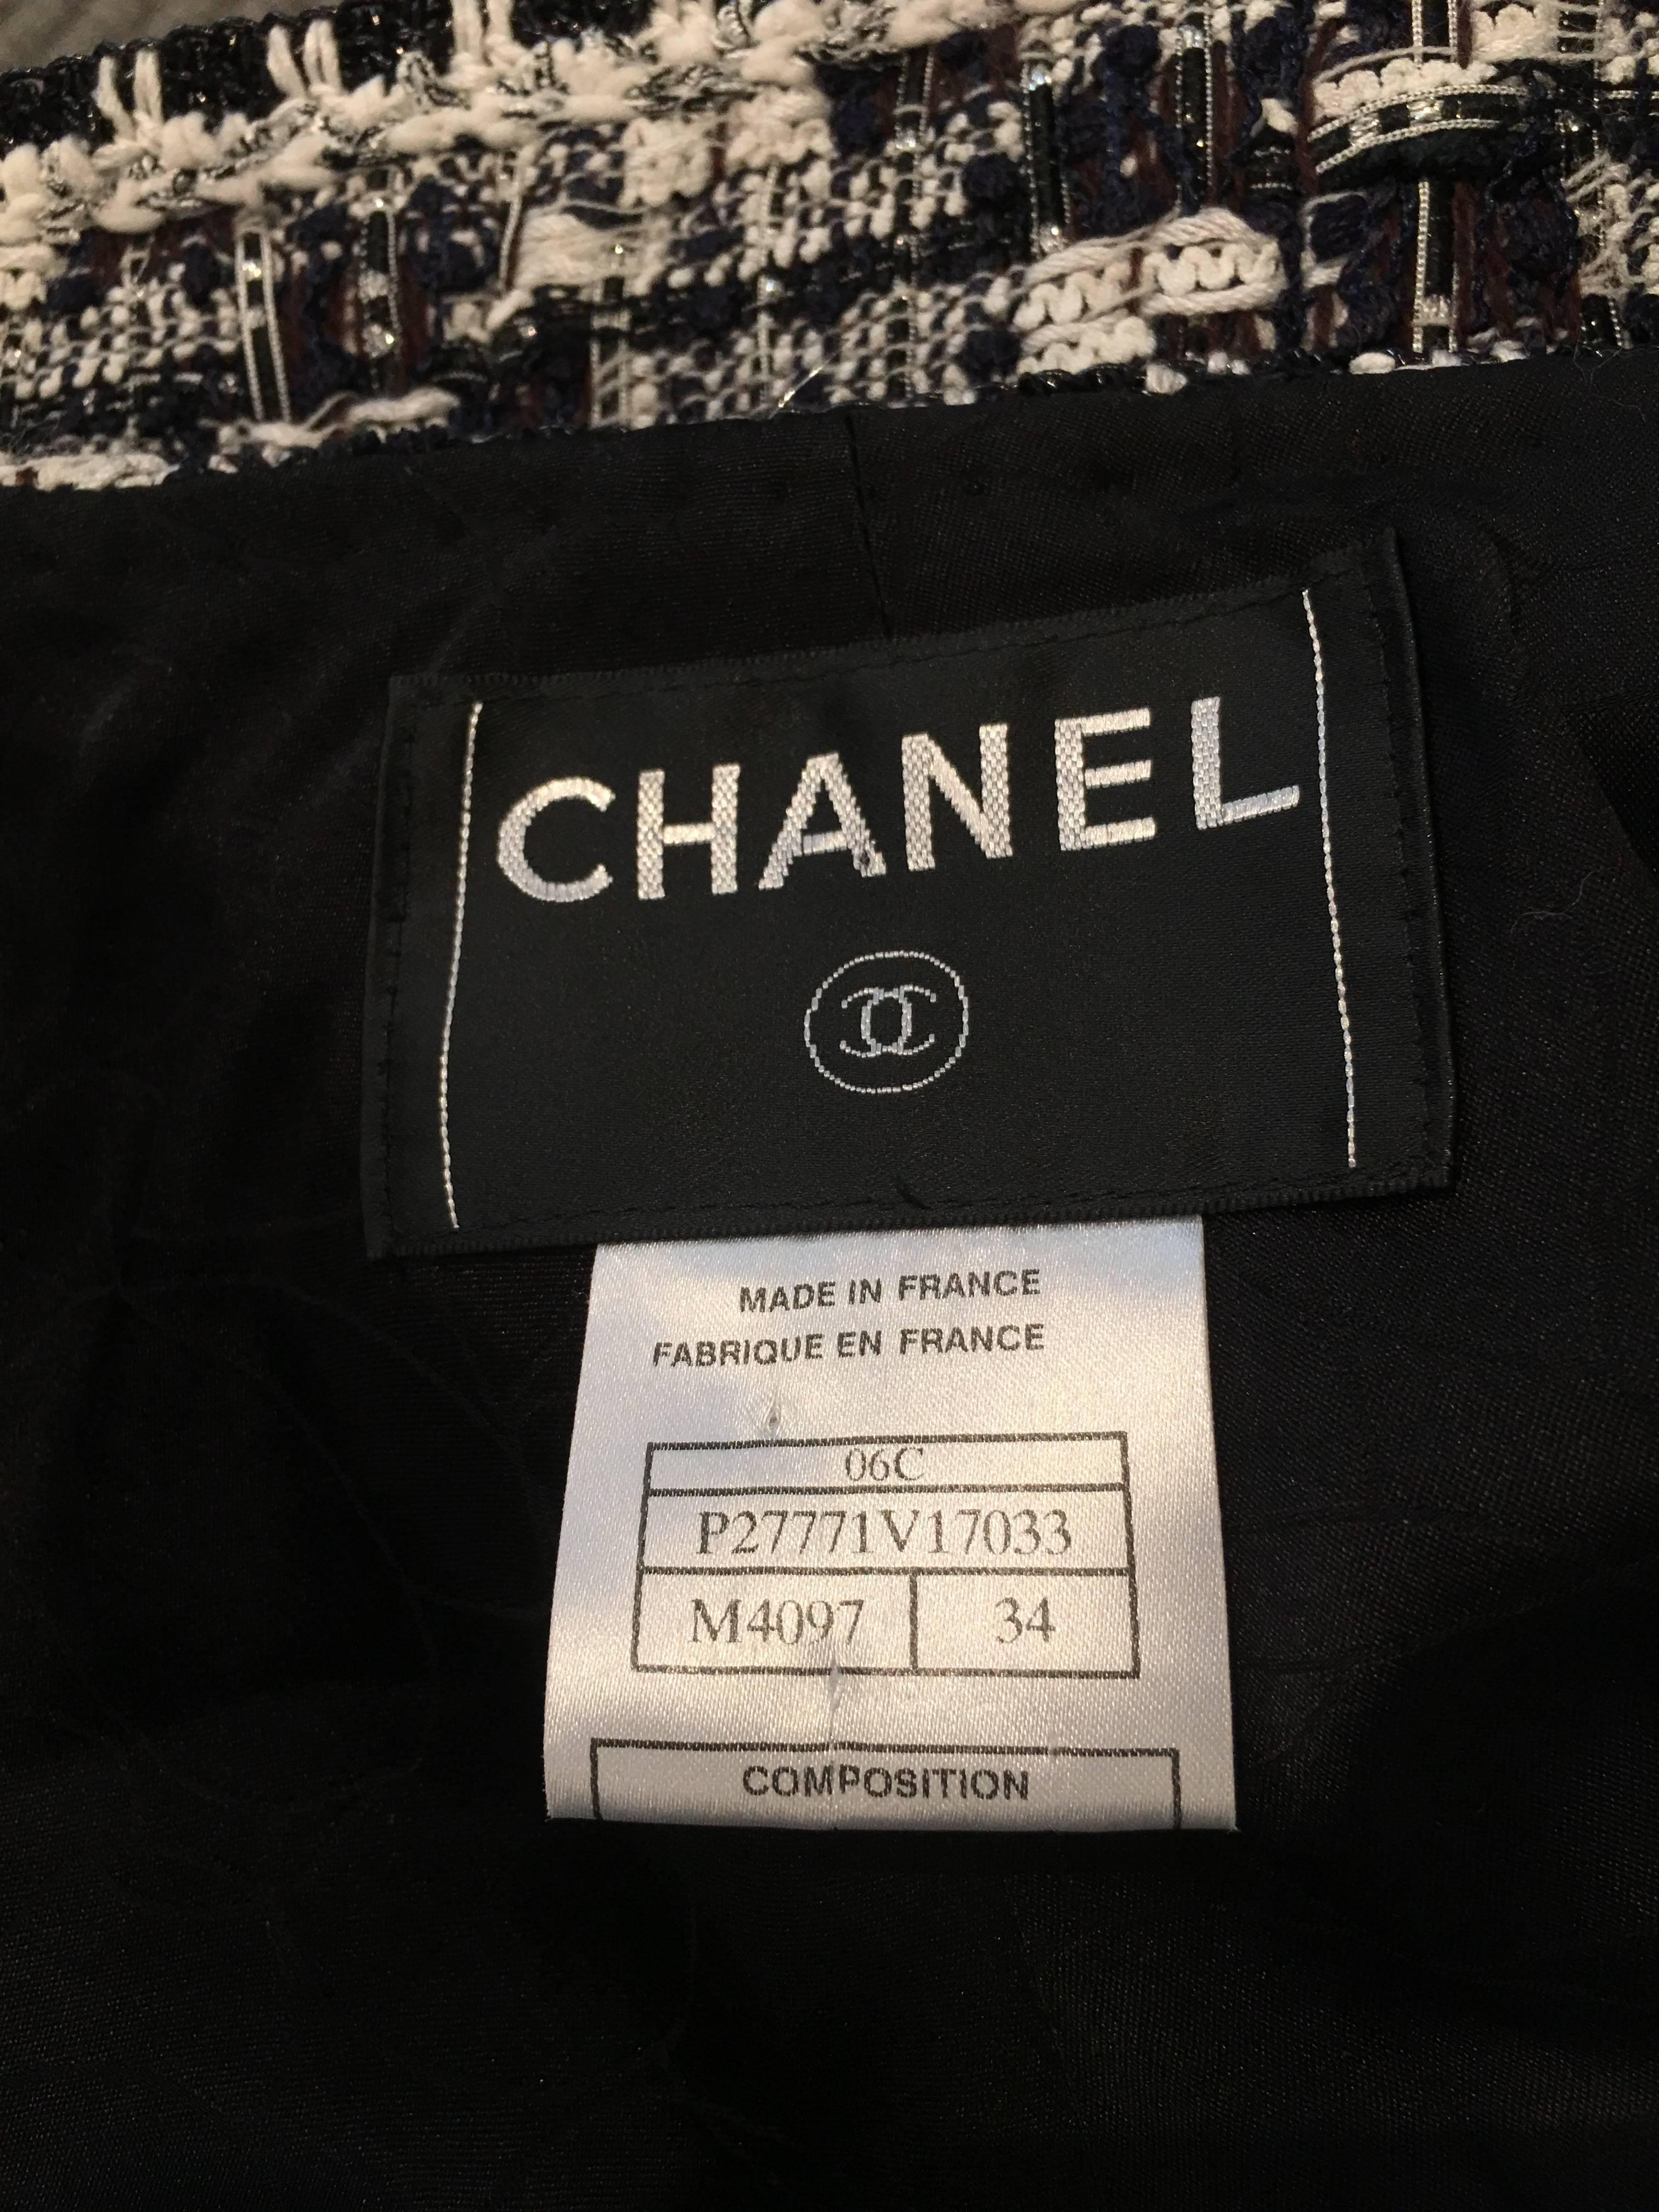 Chanel Black and White Jacket sz 34 6